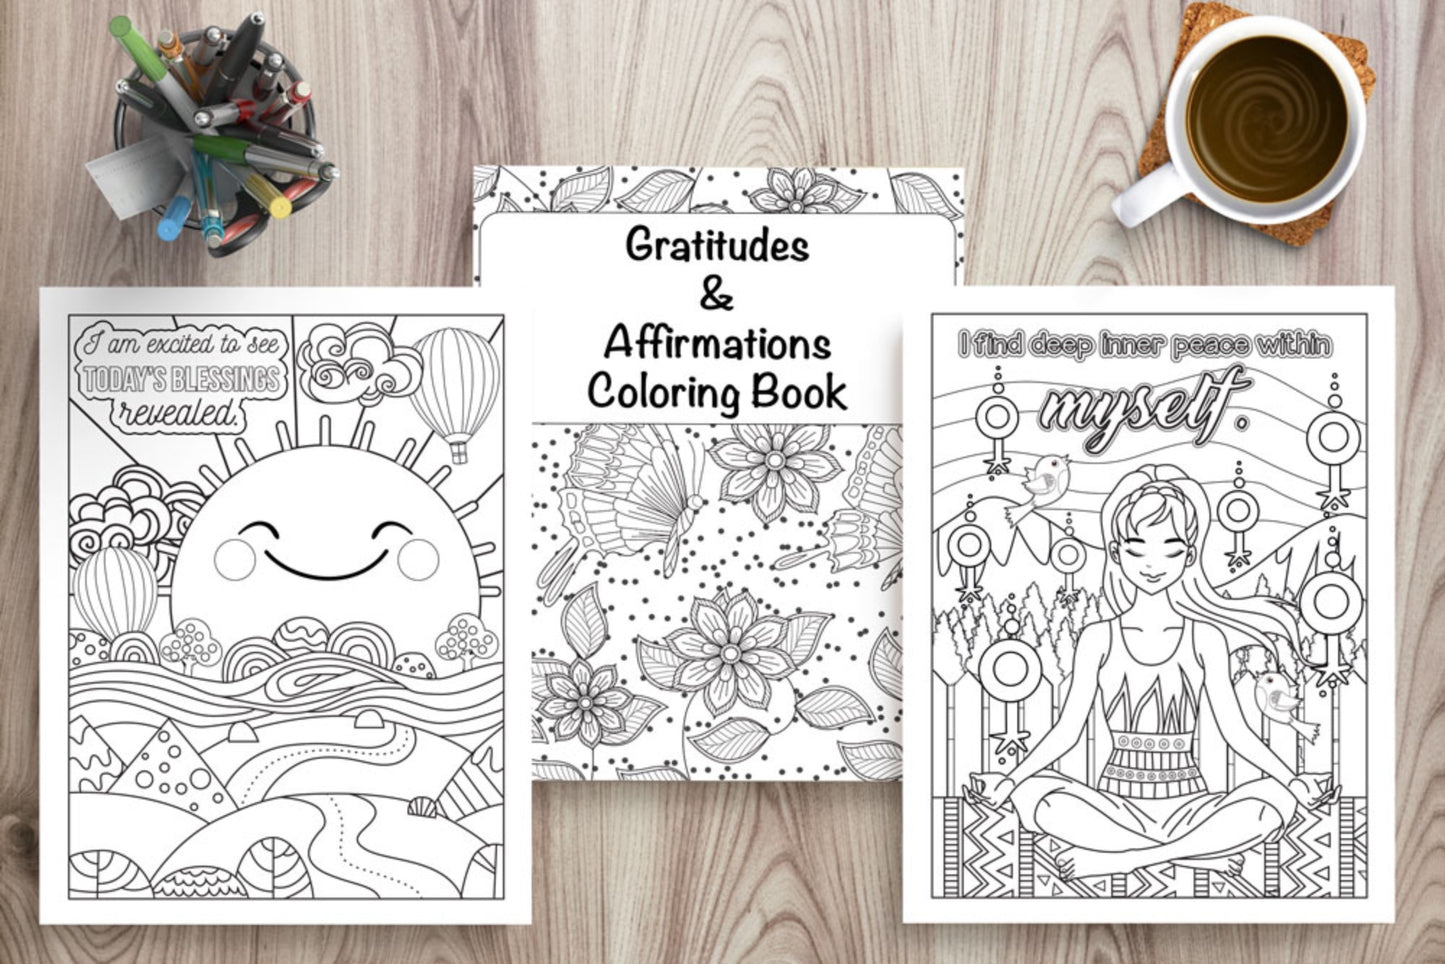 Gratitude & Affirmation Coloring Book